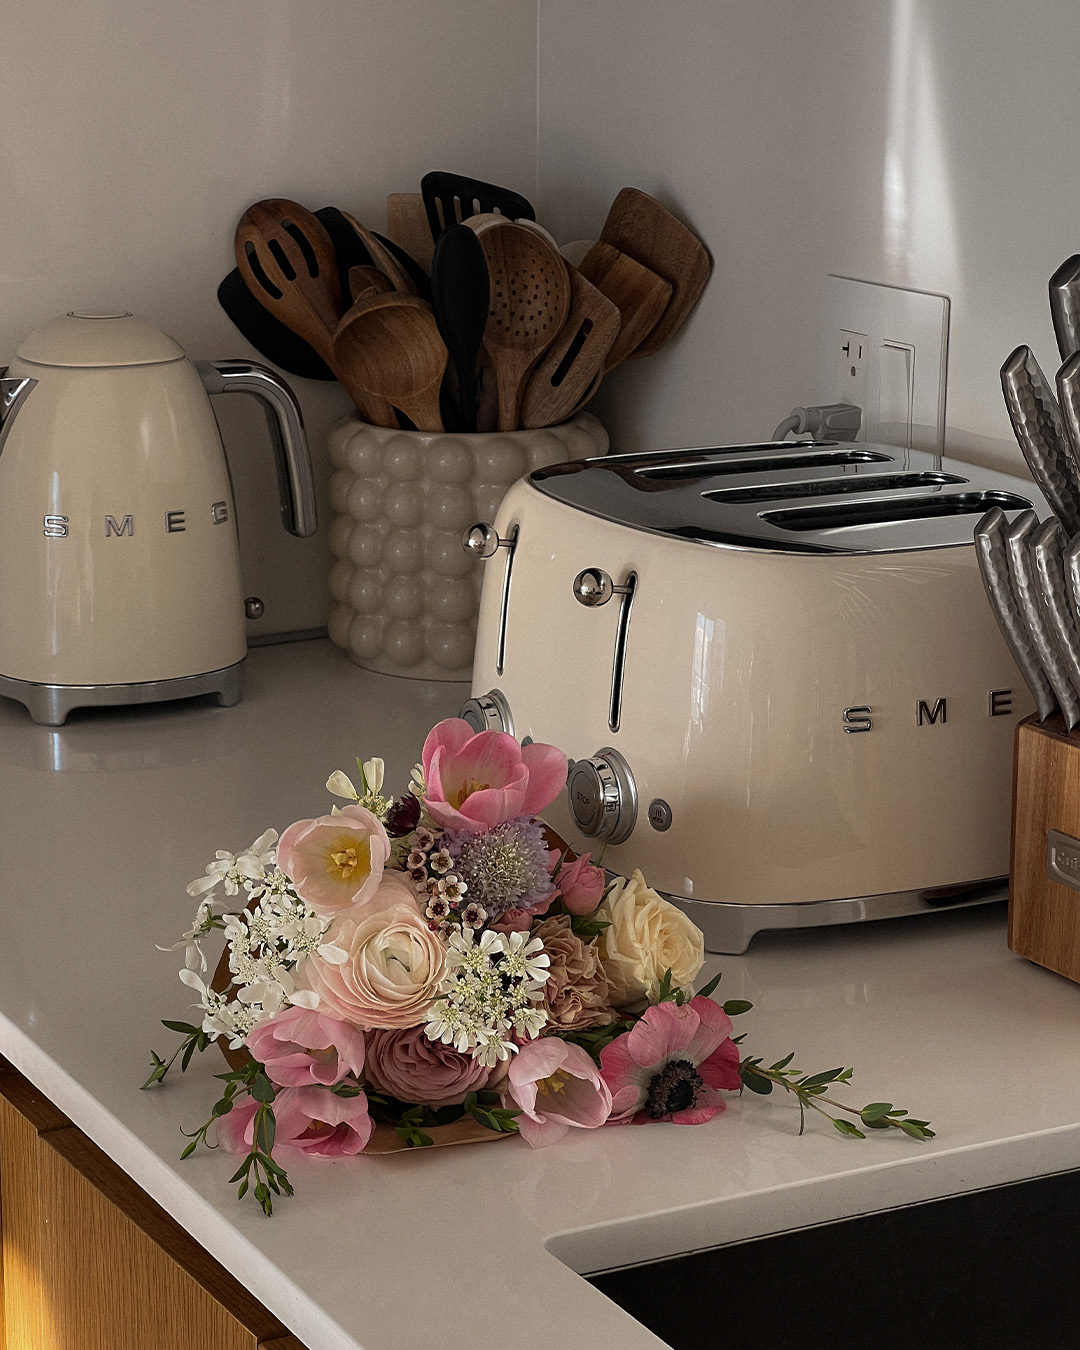 Smeg kitchen appliances sit on a counter top alongside flowers.